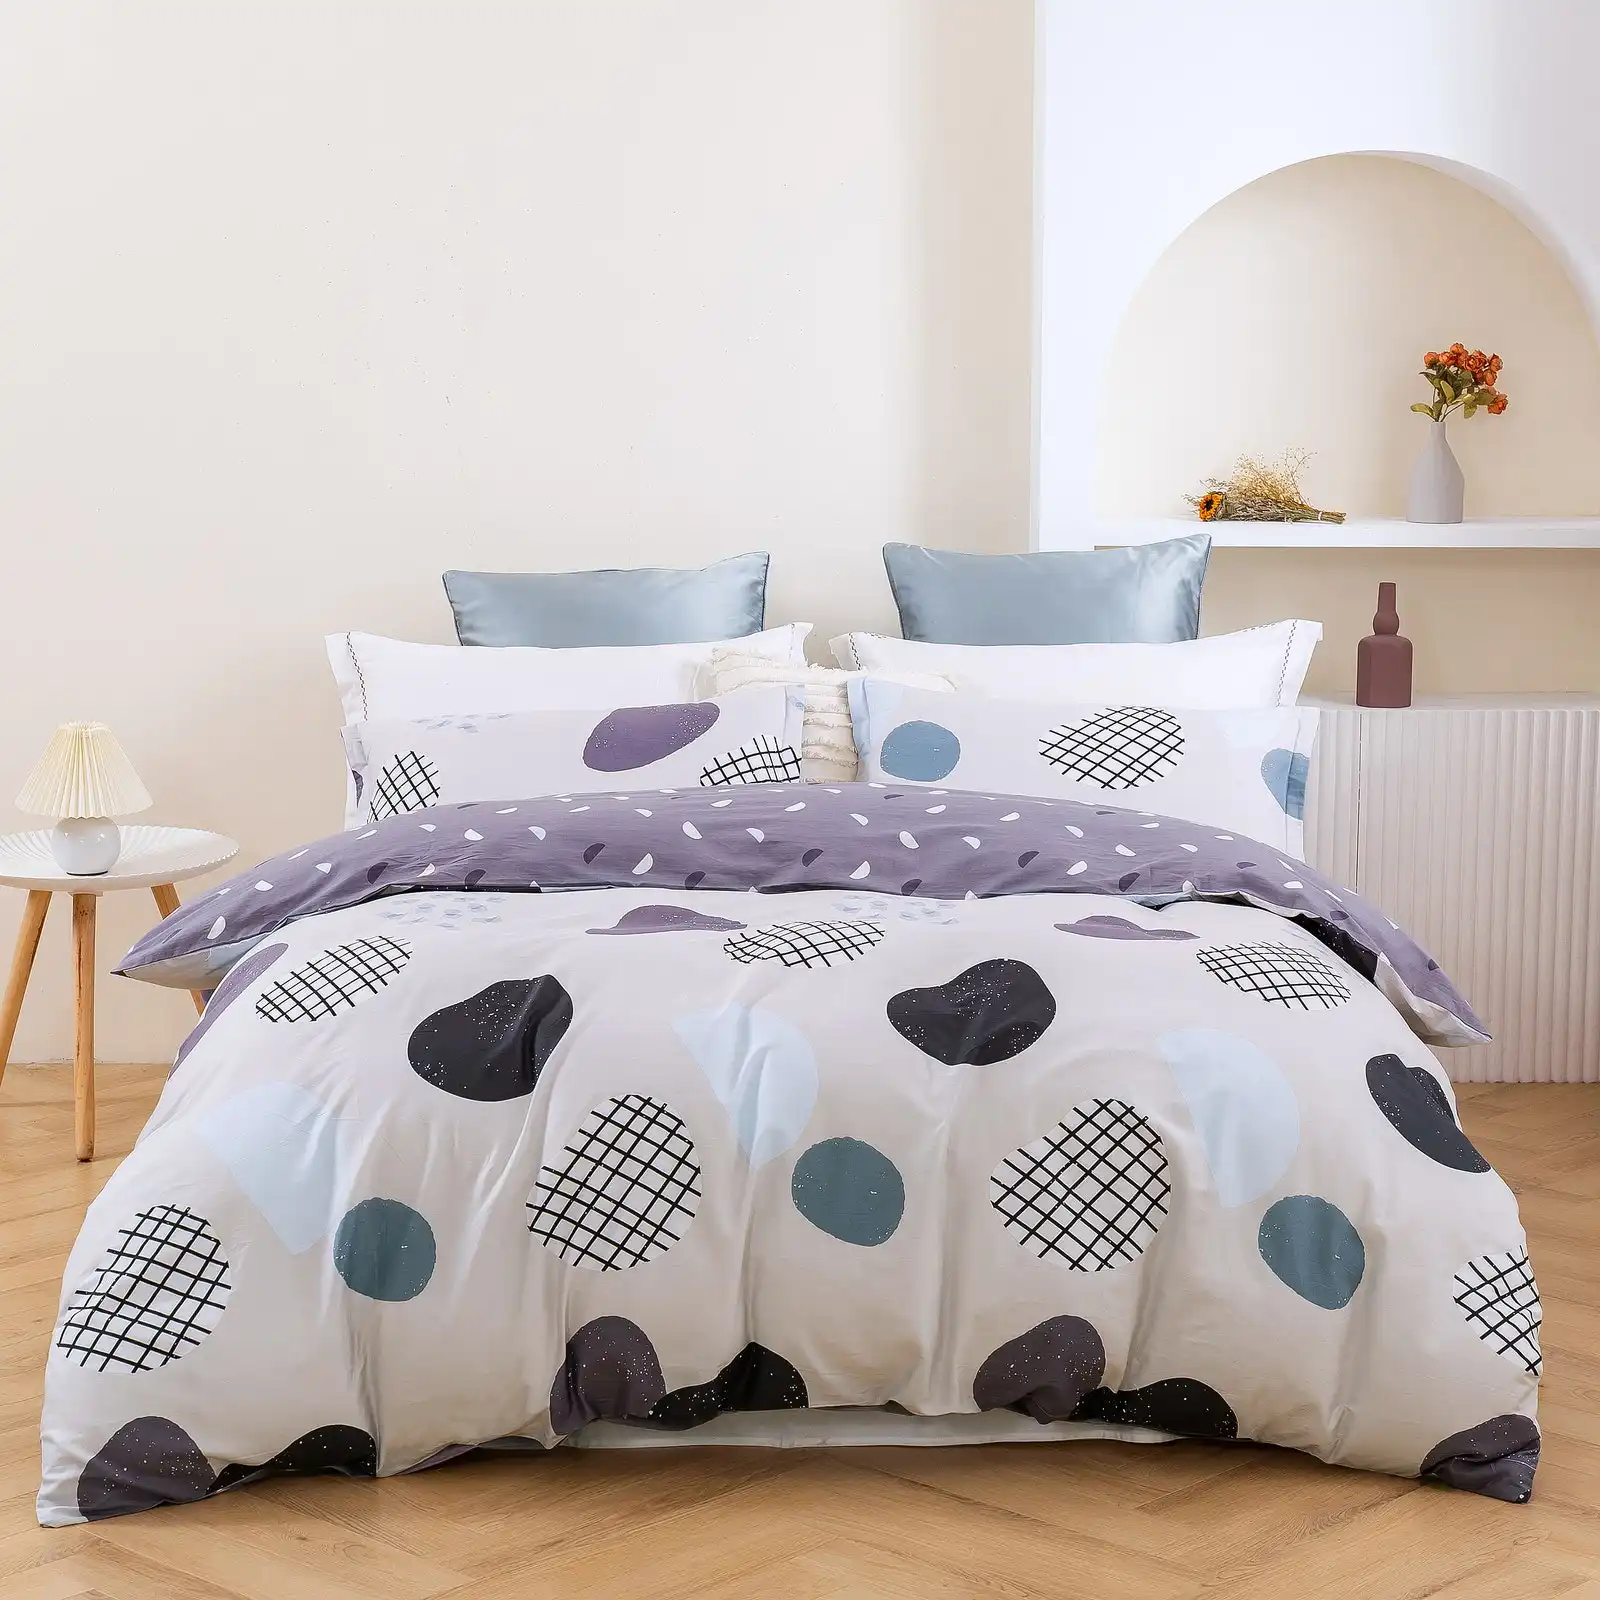 Dreamaker Orion 100% Cotton Reversible Quilt Cover Set Queen Bed